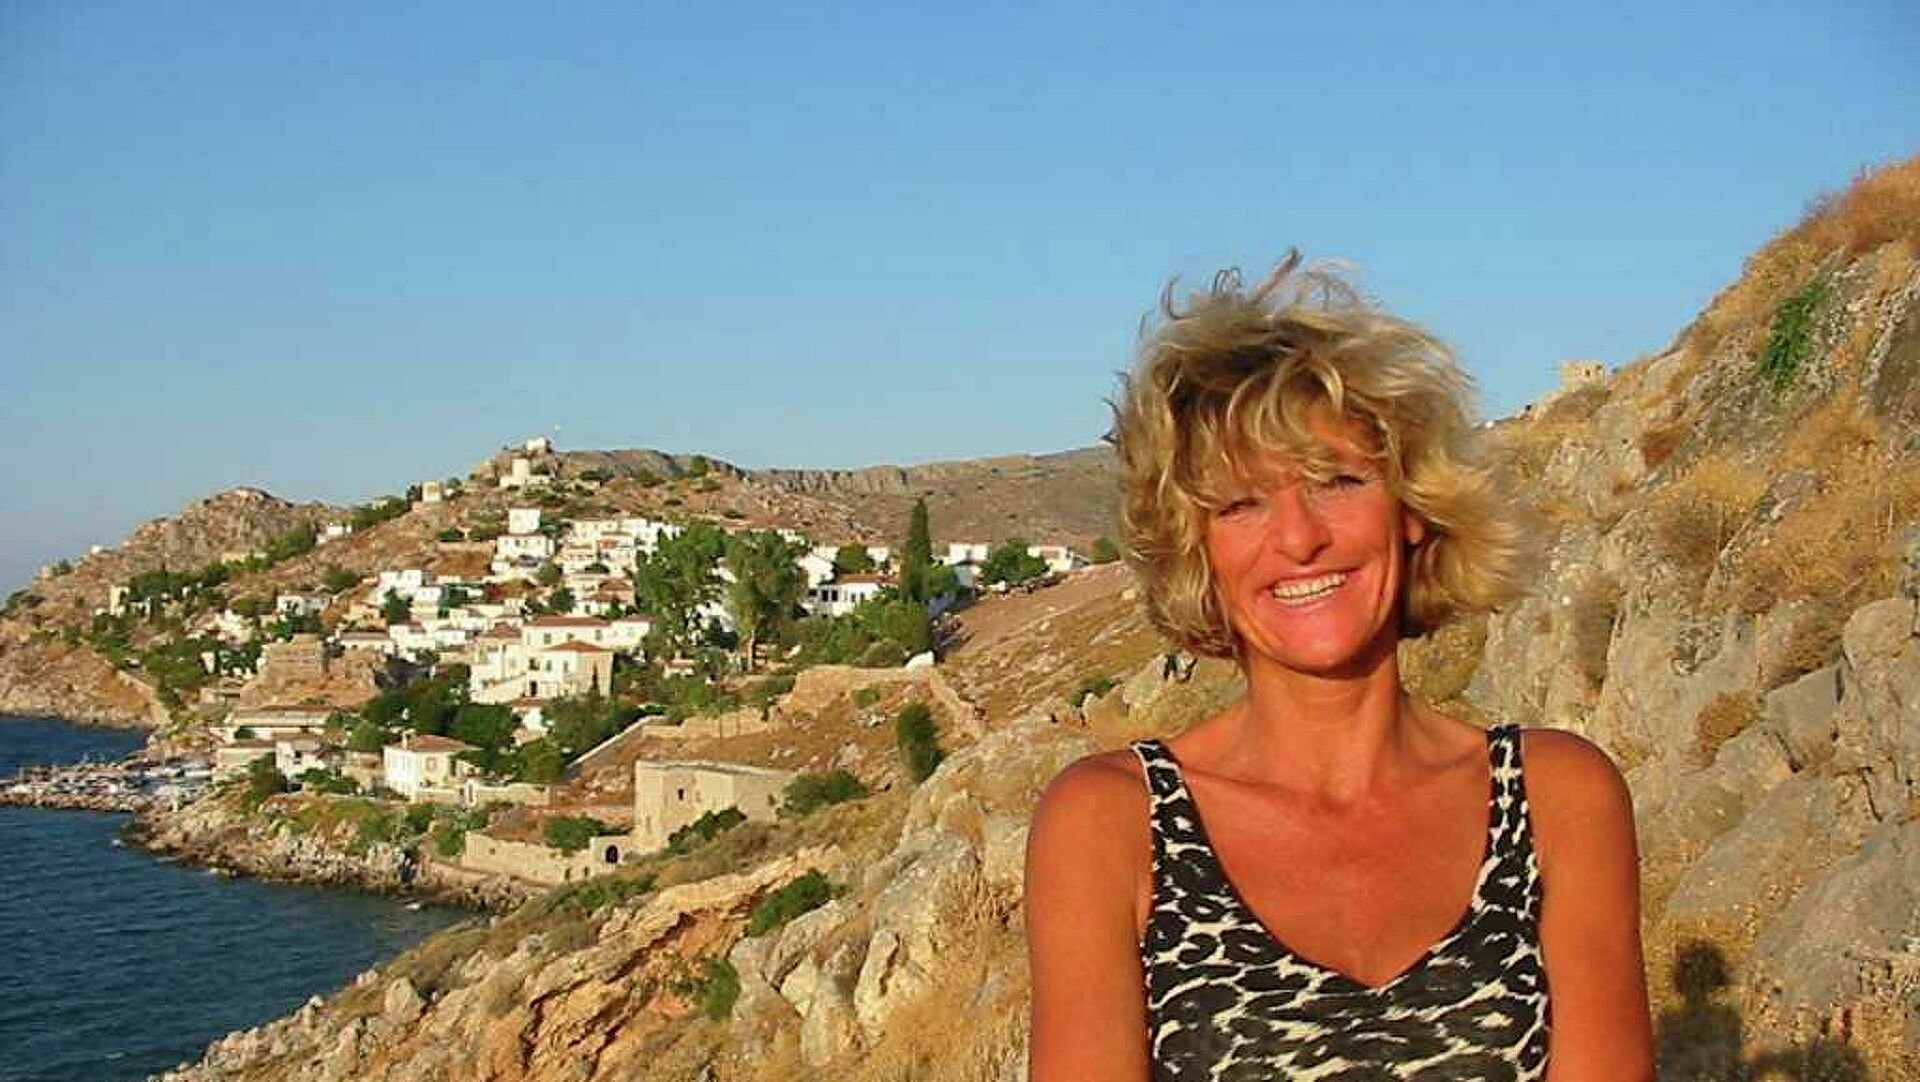 Ingeborg Beugel: Εκθέτει τις ελληνικές αρχές η 62χρονη – Της επιτέθηκαν με πέτρα, φεύγει από την Ελλάδα